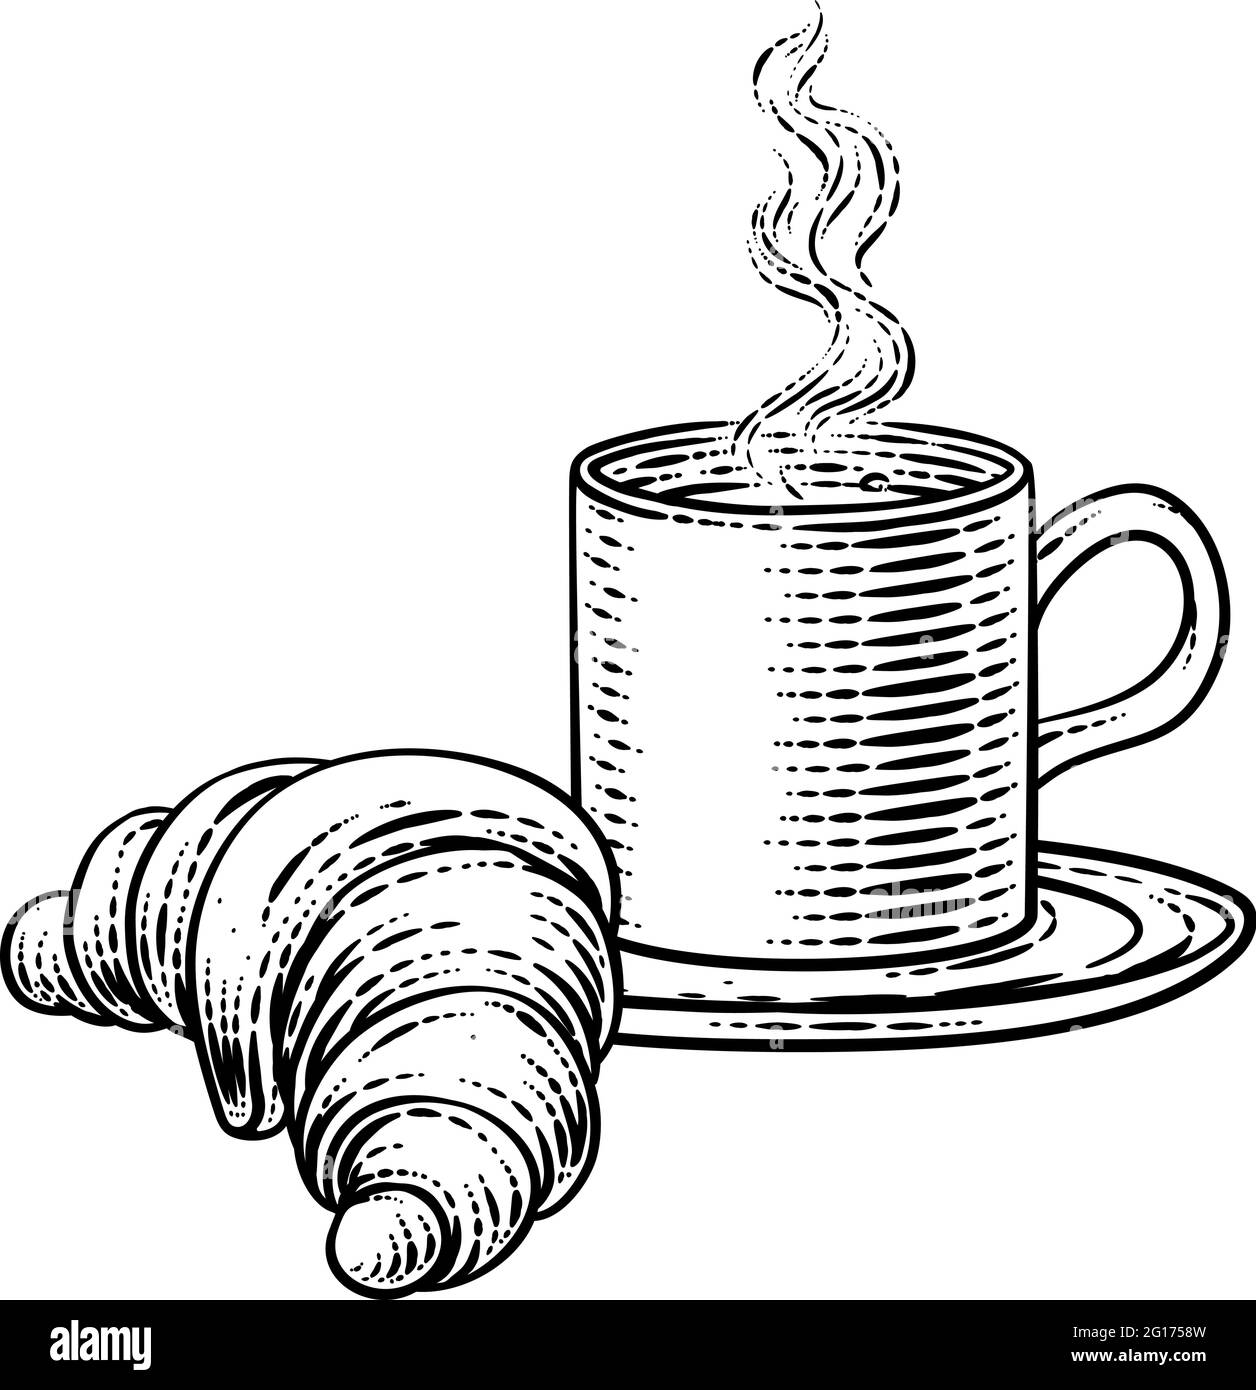 Tasse Kaffee-Tee und Croissant-Holzschnitt Stock Vektor